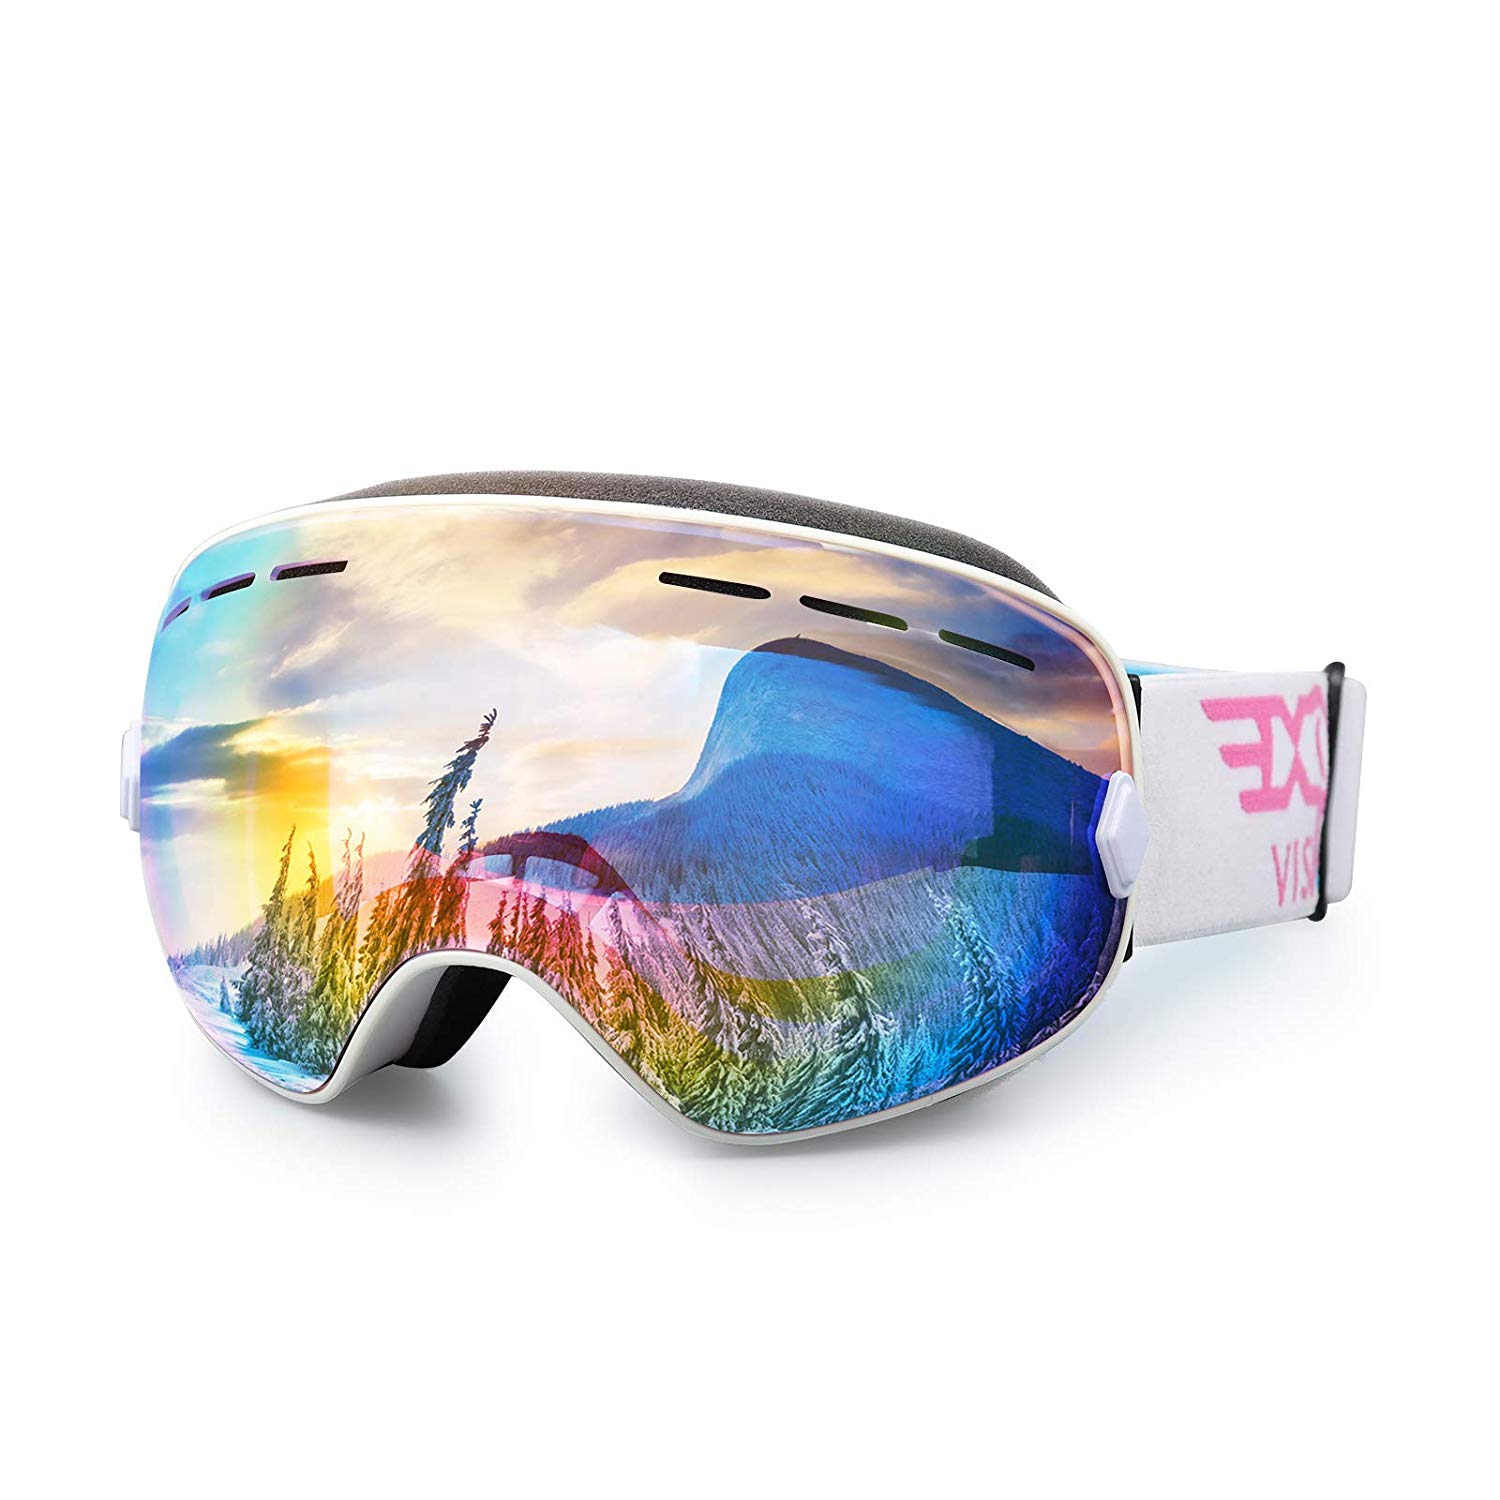 EXP VISOIN Spherical Snowboard Ski Goggles for Adult